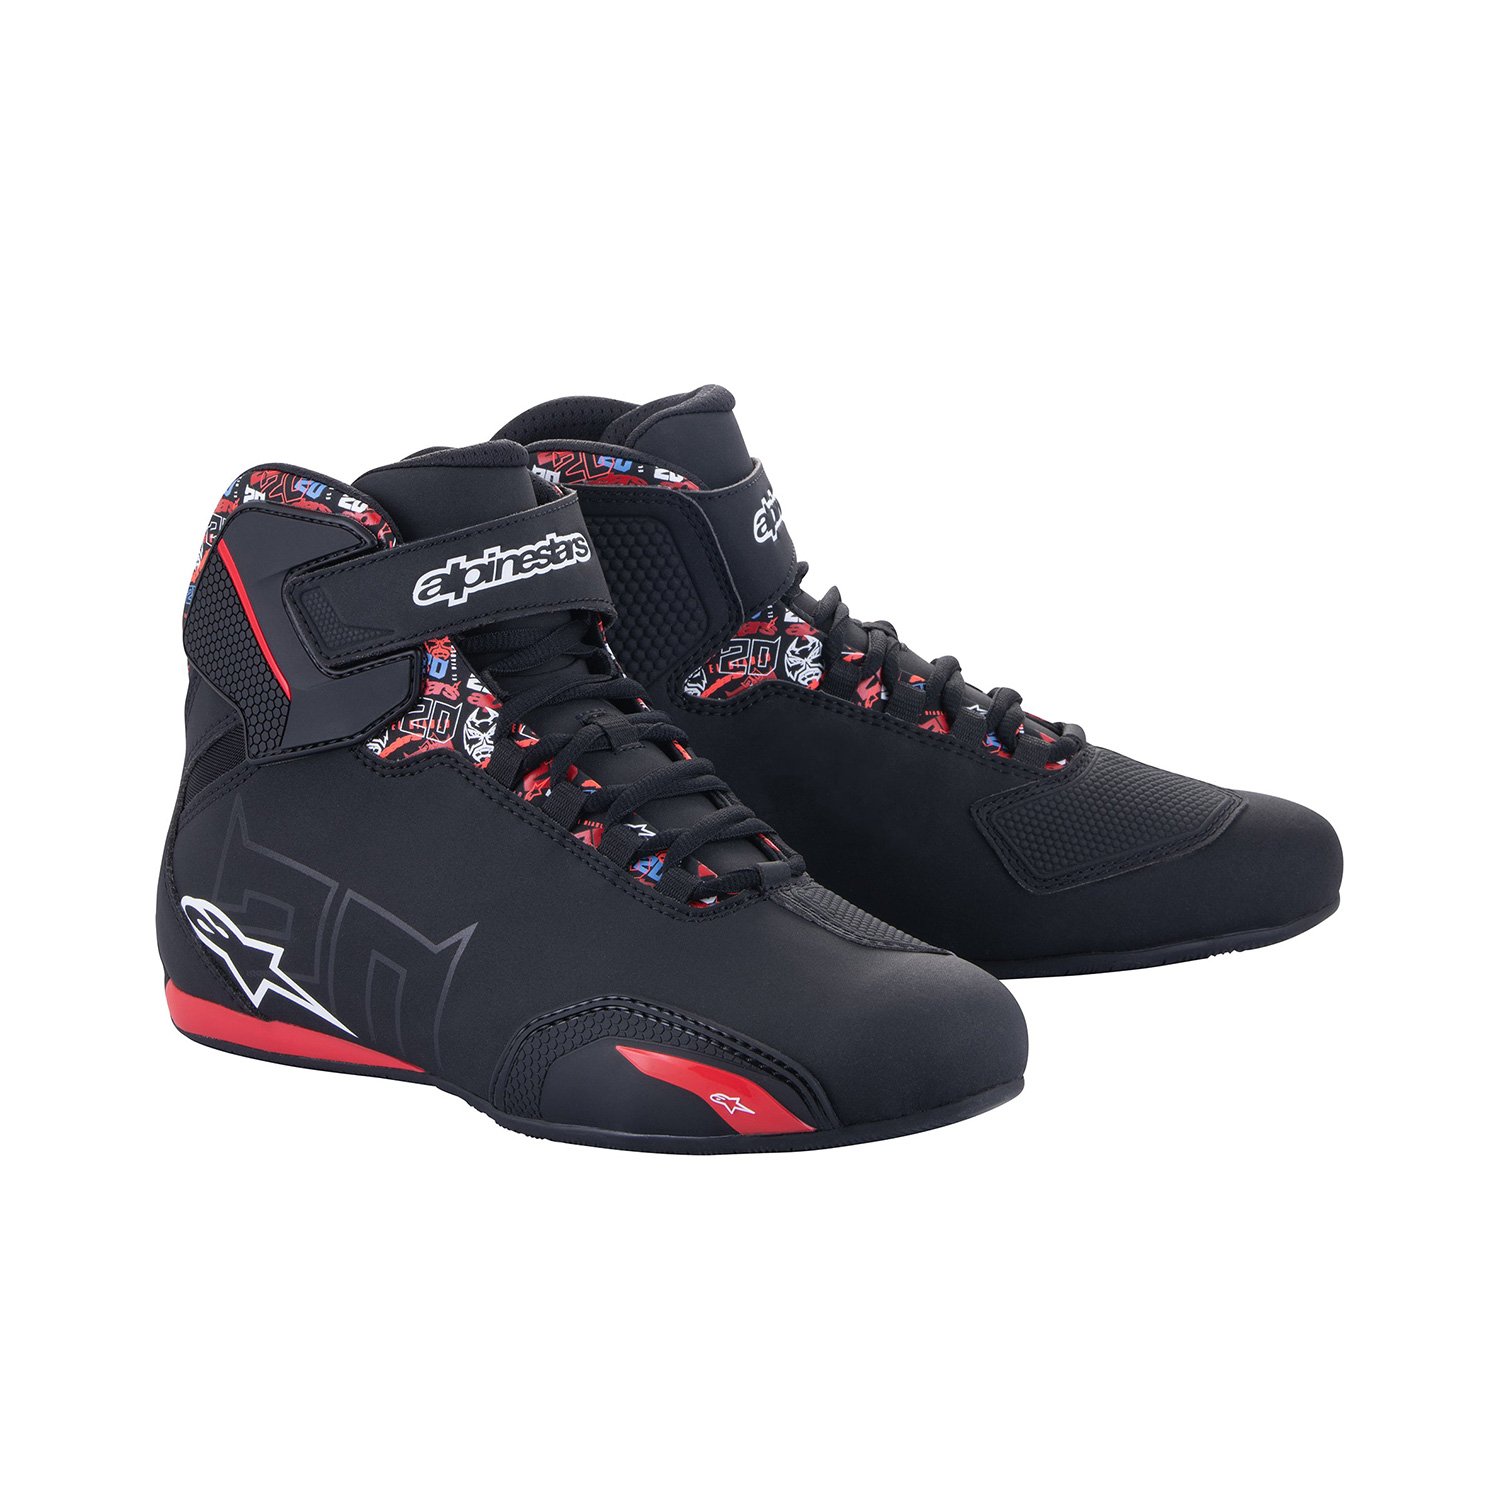 Image of Alpinestars FQ20 Sektor Shoes Black Bright Red Size US 6 ID 8059347261409